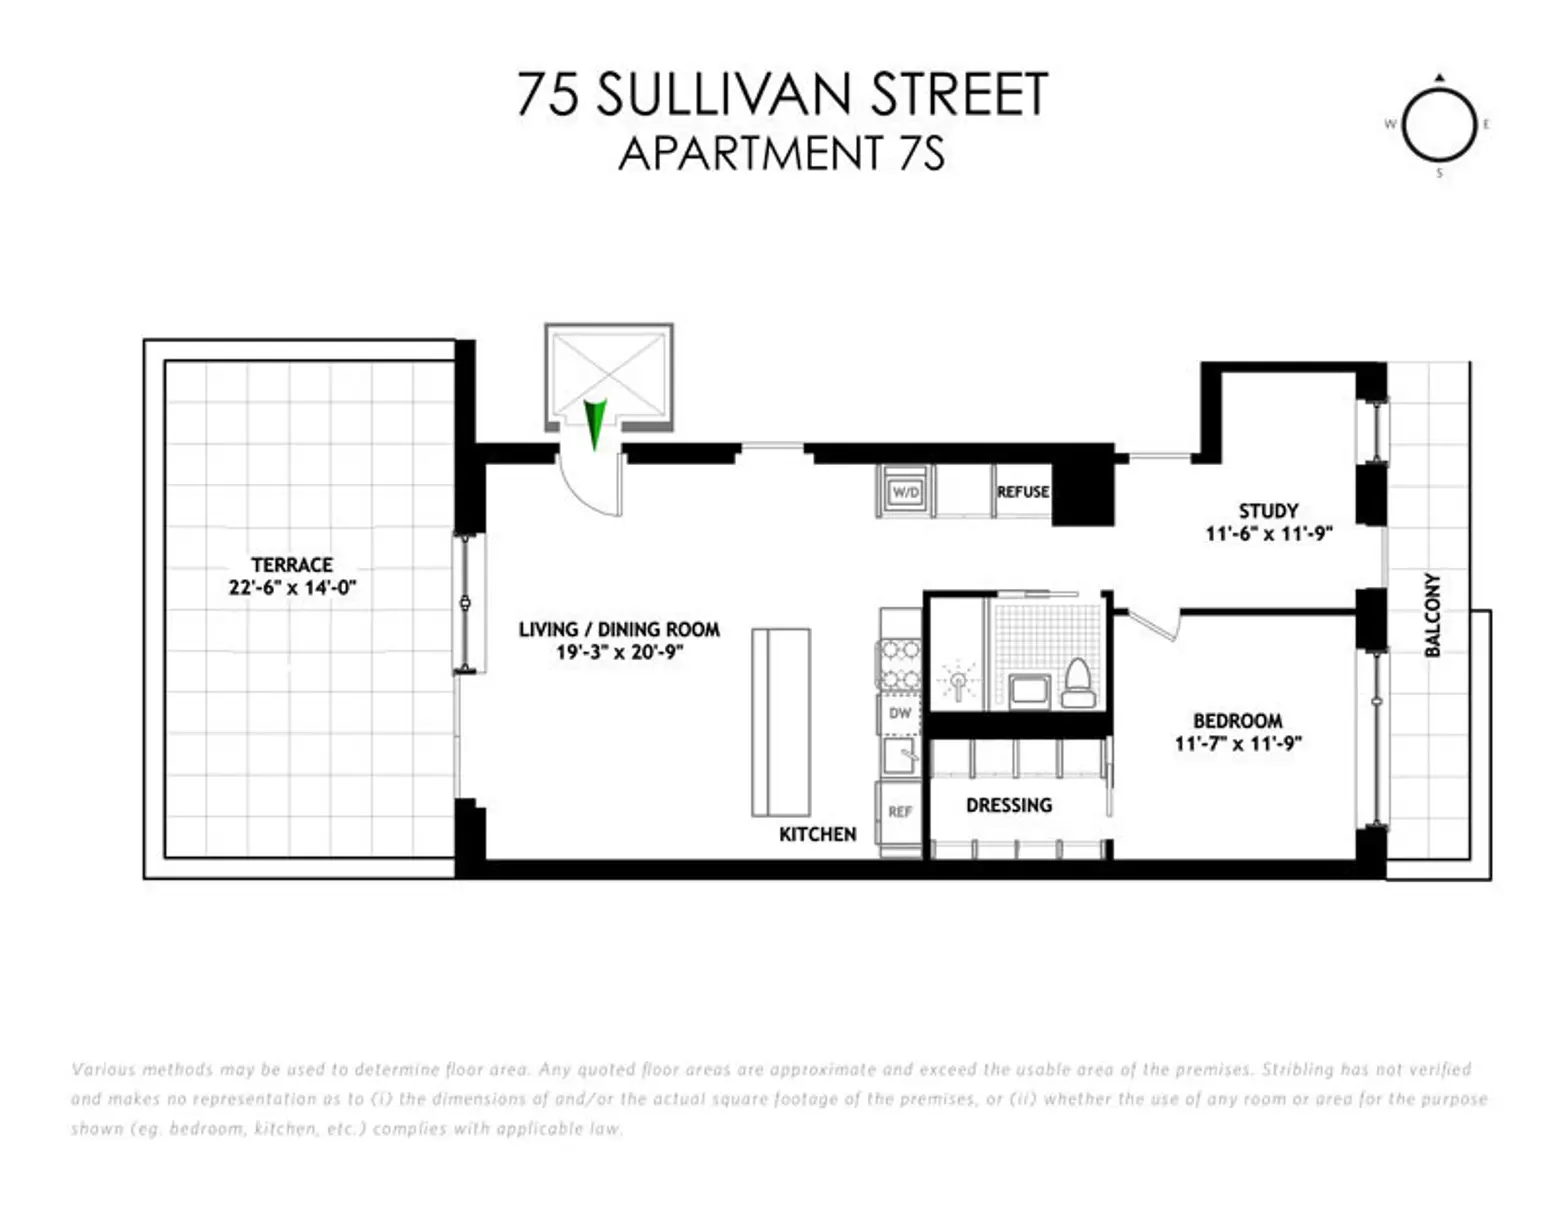 75 SUllivan Street, 73 Sullivan Street, SoHo rentals, NYC apartments